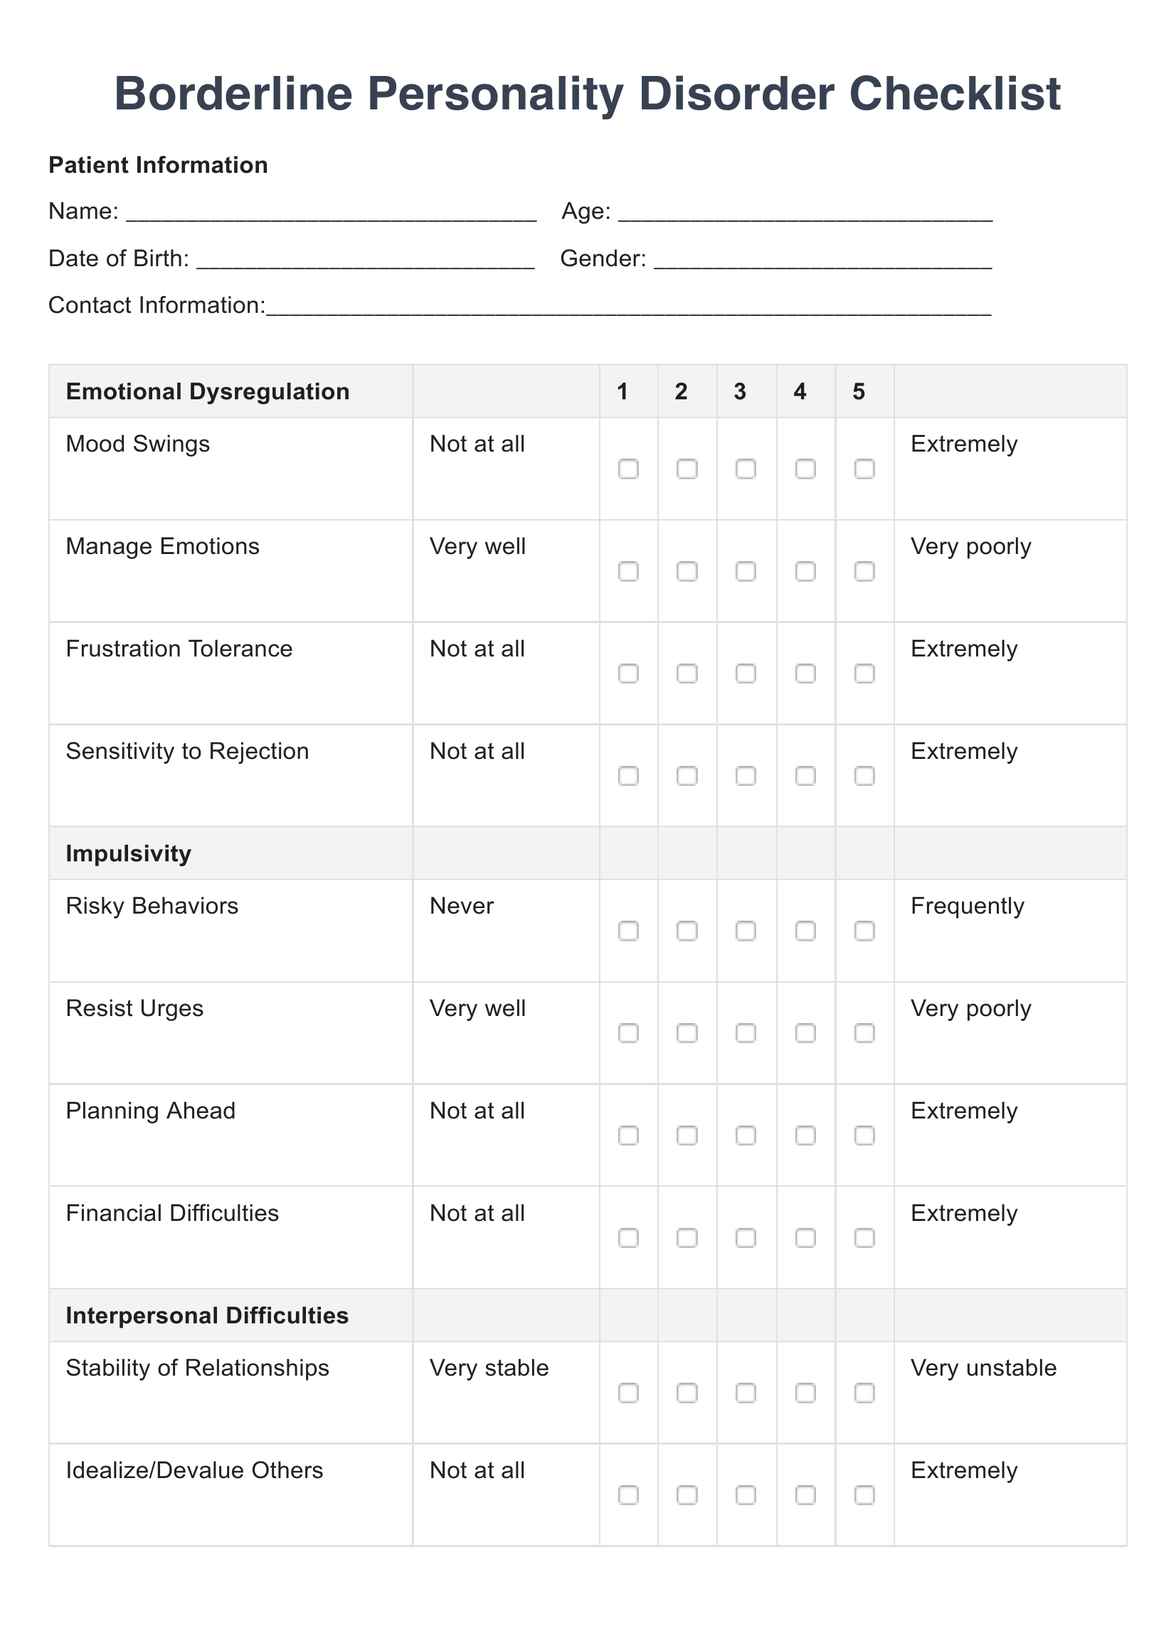 Borderline Personality Disorder Checklist Template PDF Example